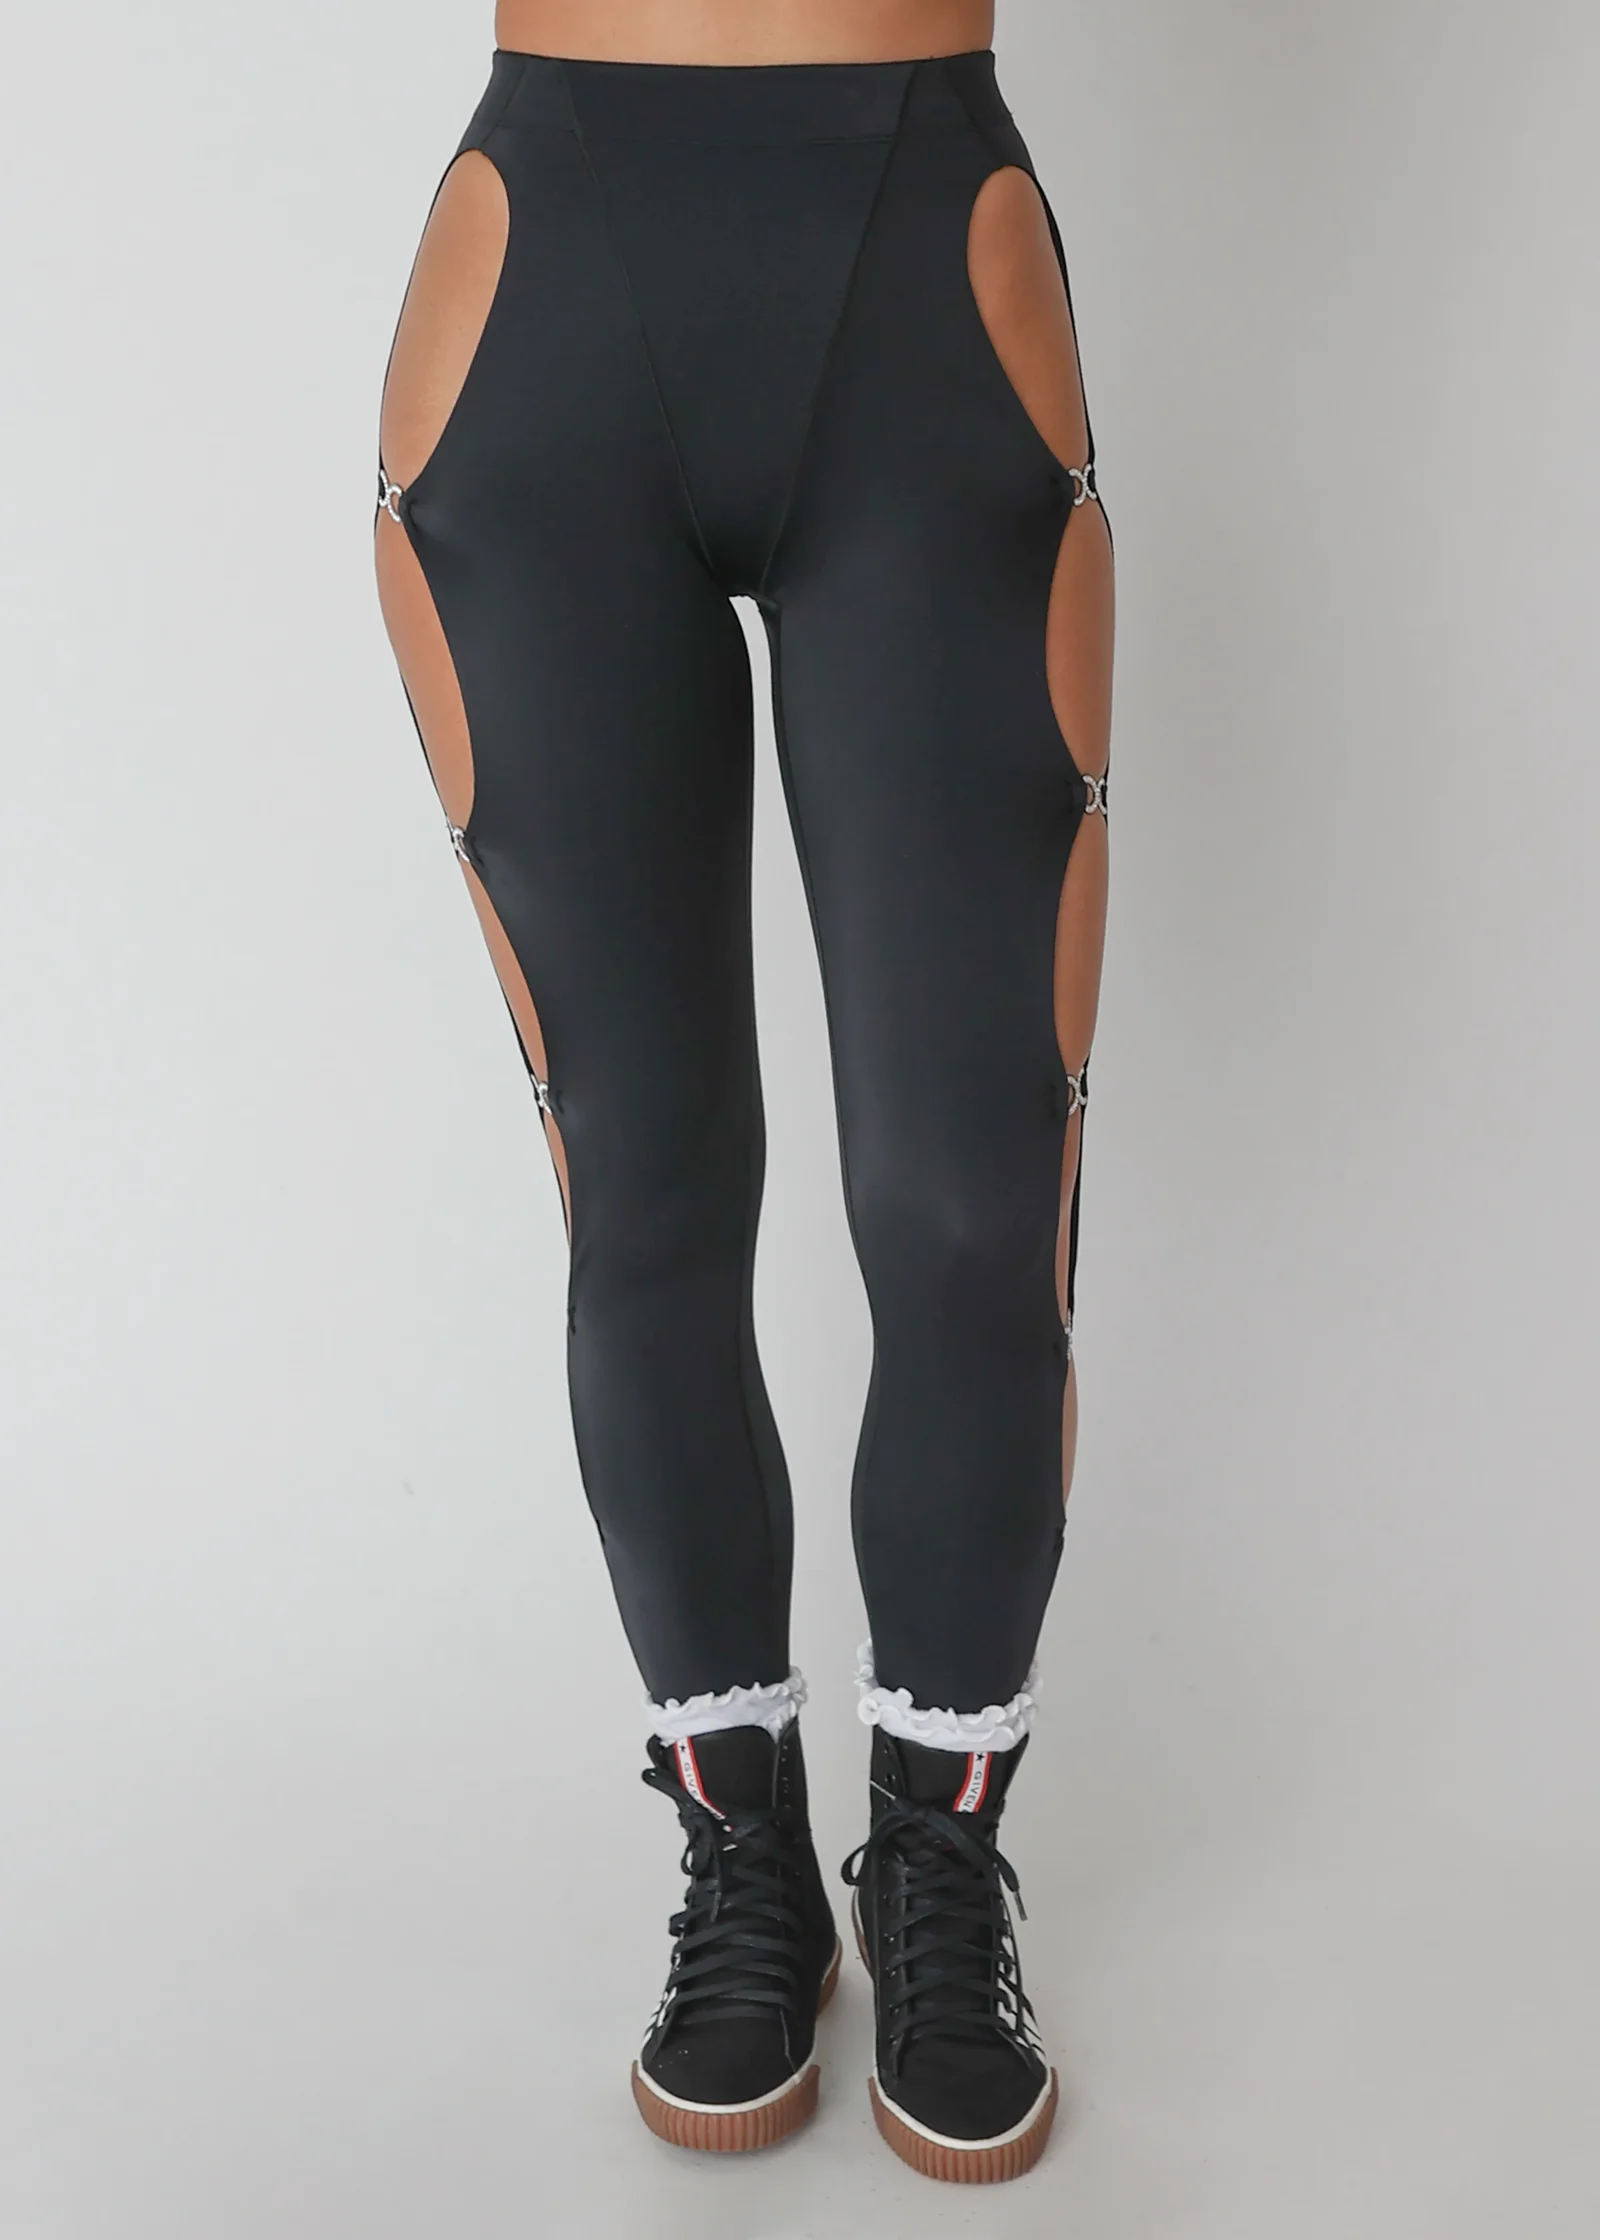 Crystal Cutout high-rise leggings in black - Adam Selman Sport